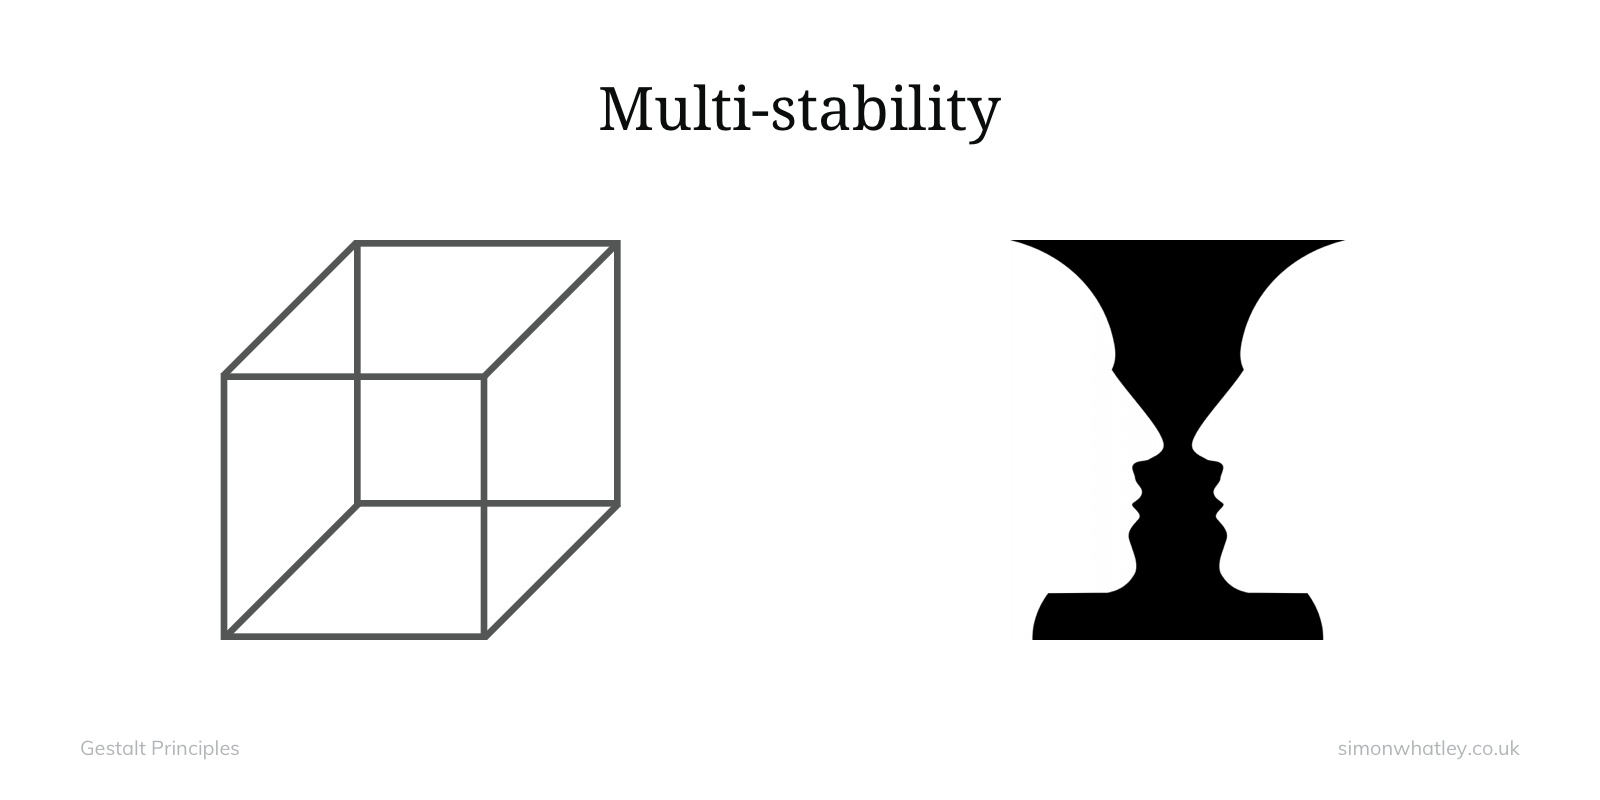 Gestalt principle: Multi-stability